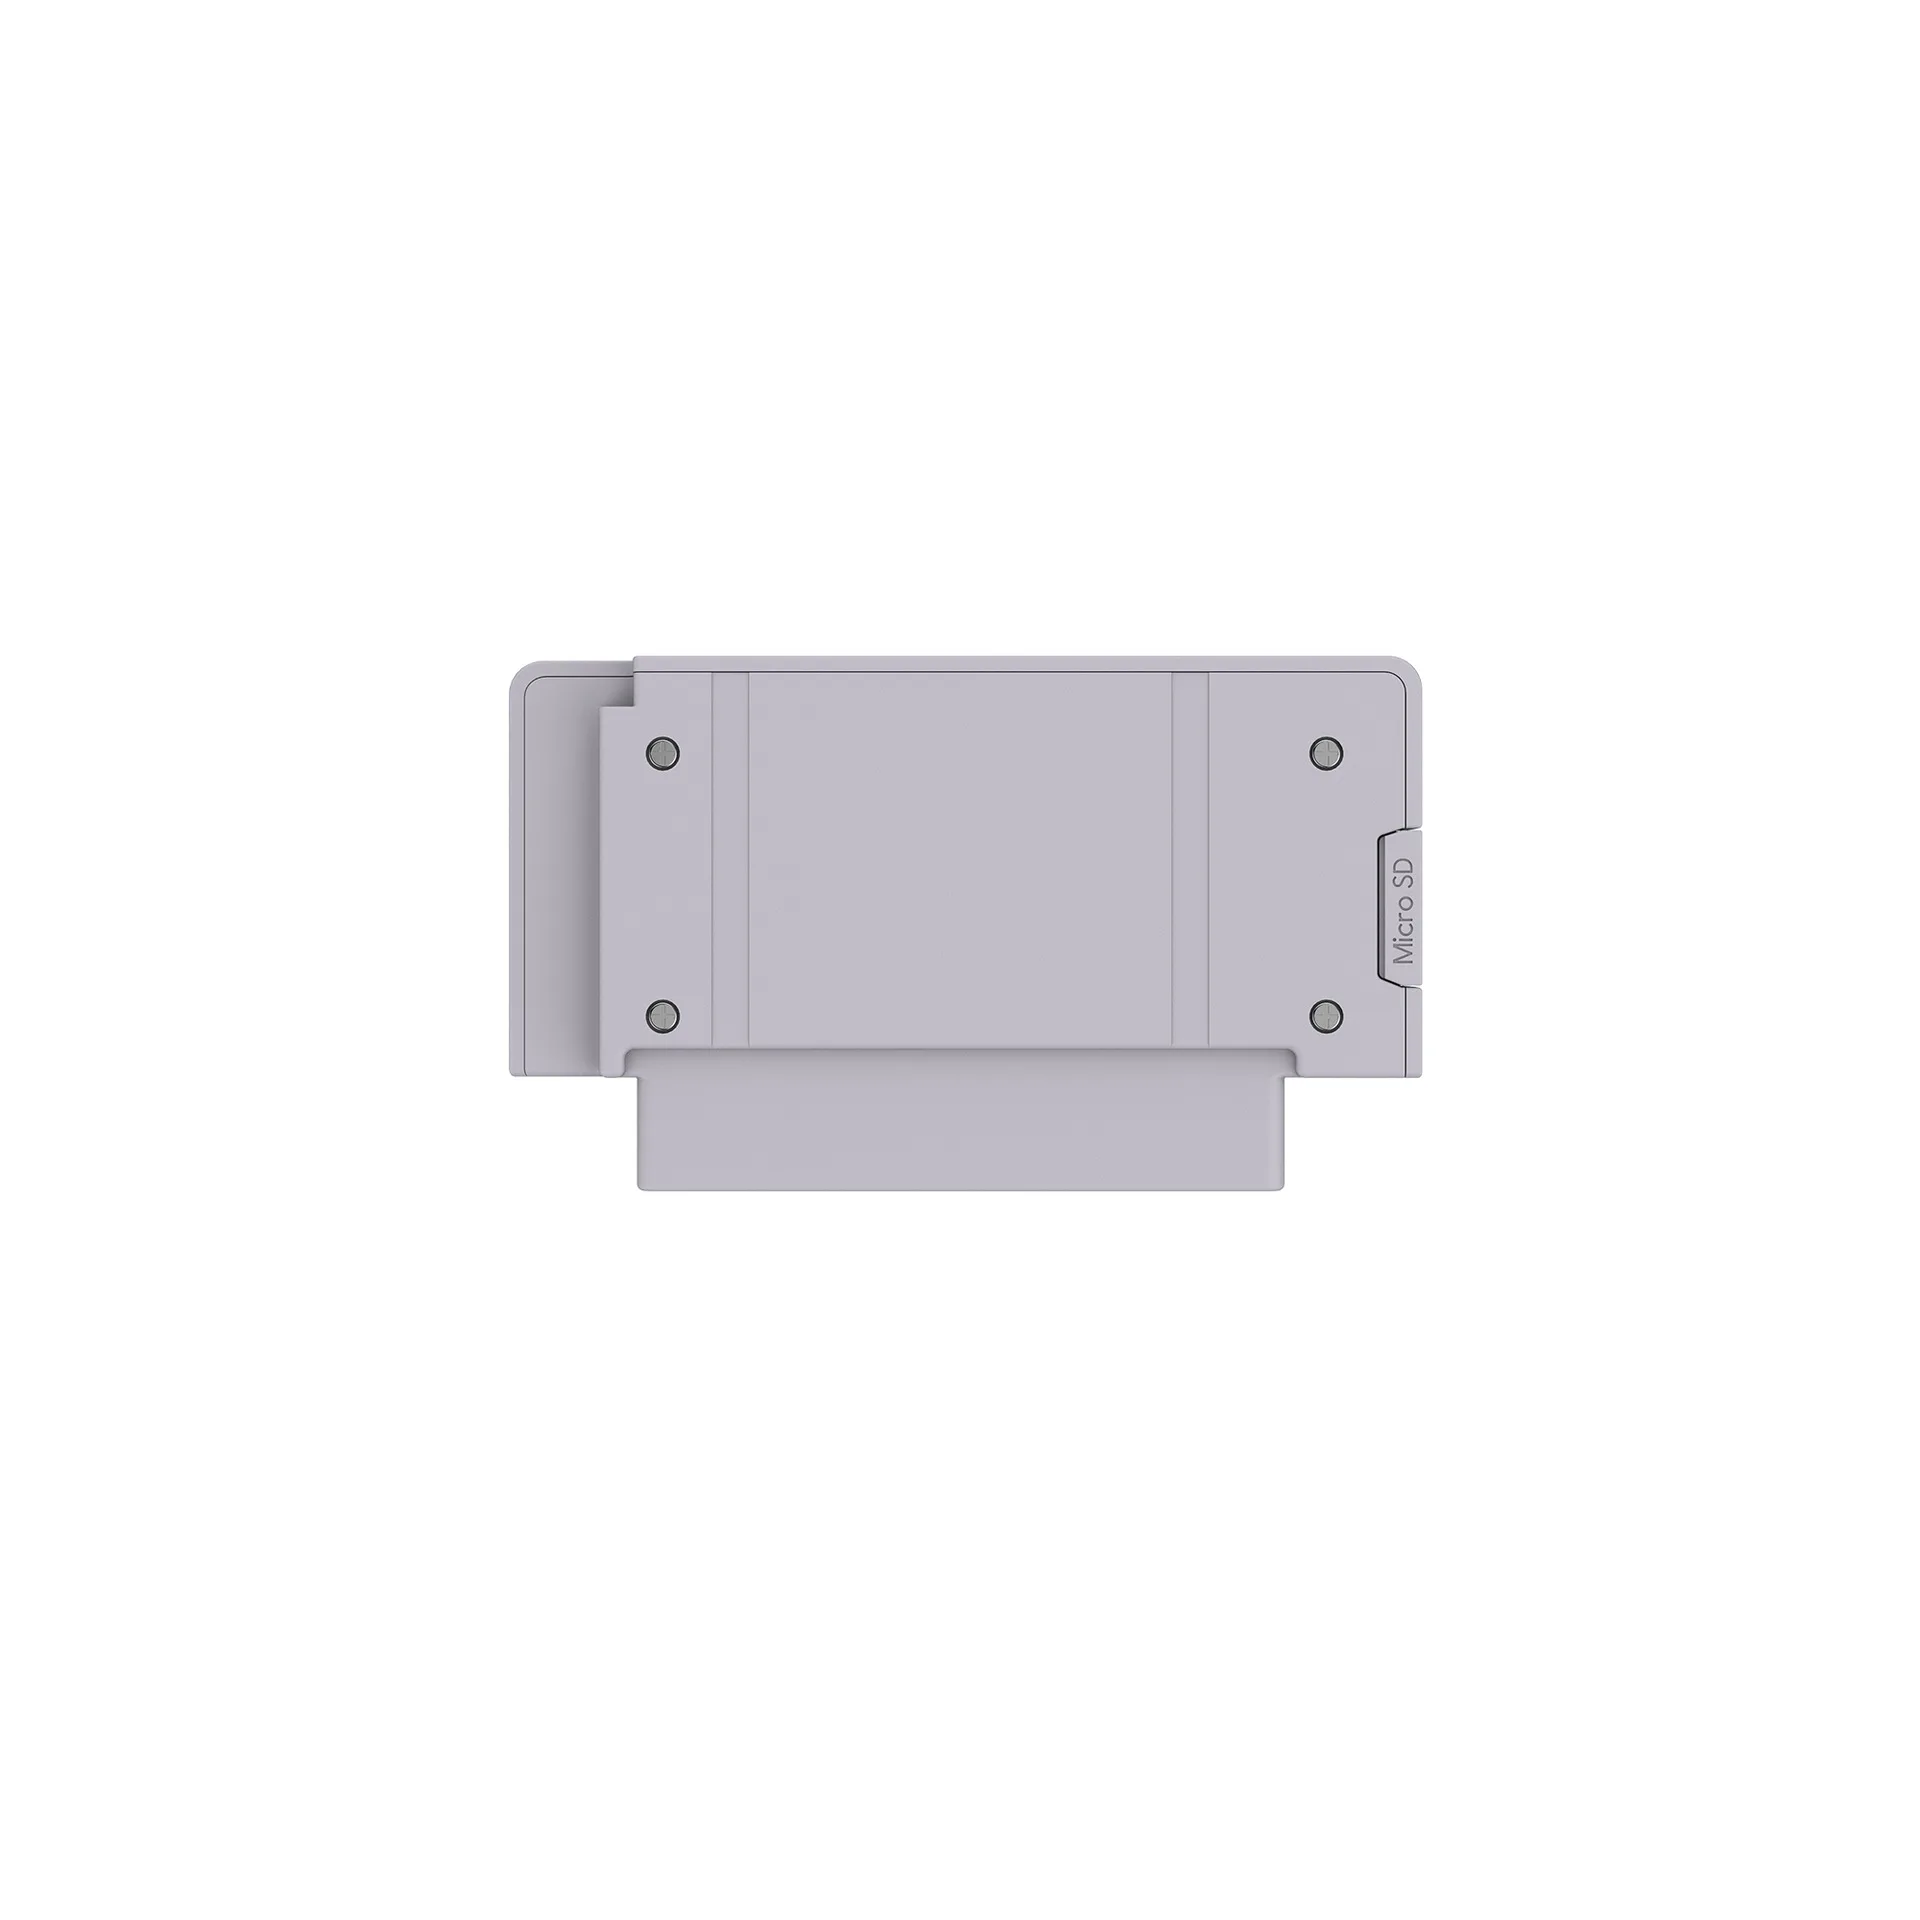 Retroflag GPi Чехол комплект с 32G Micro SD карта радиатор сумка для Raspberry Zero W GPi чехол